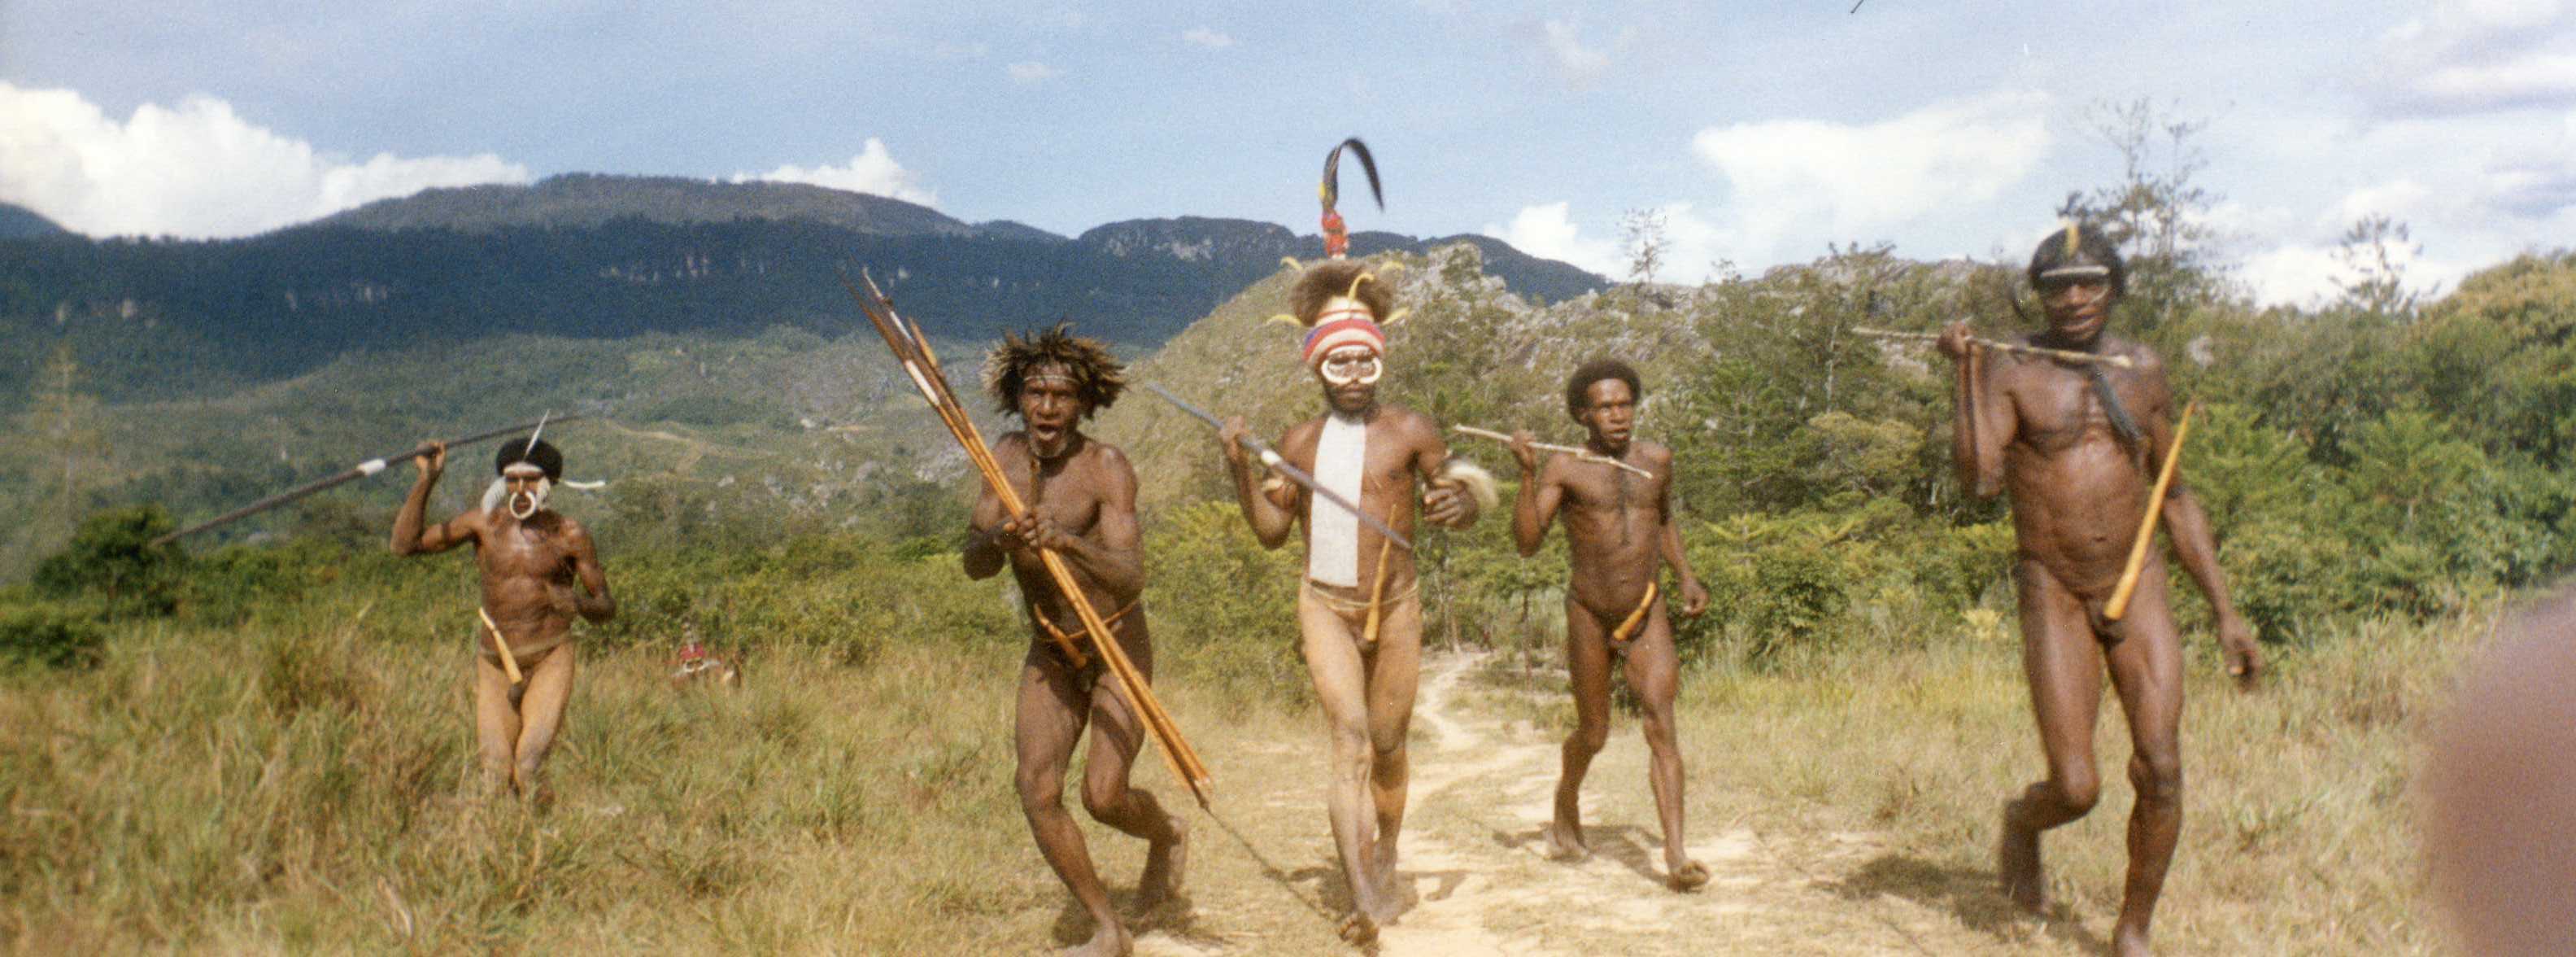 Baliem valley ethno tourism, Indonesia, New Guinea